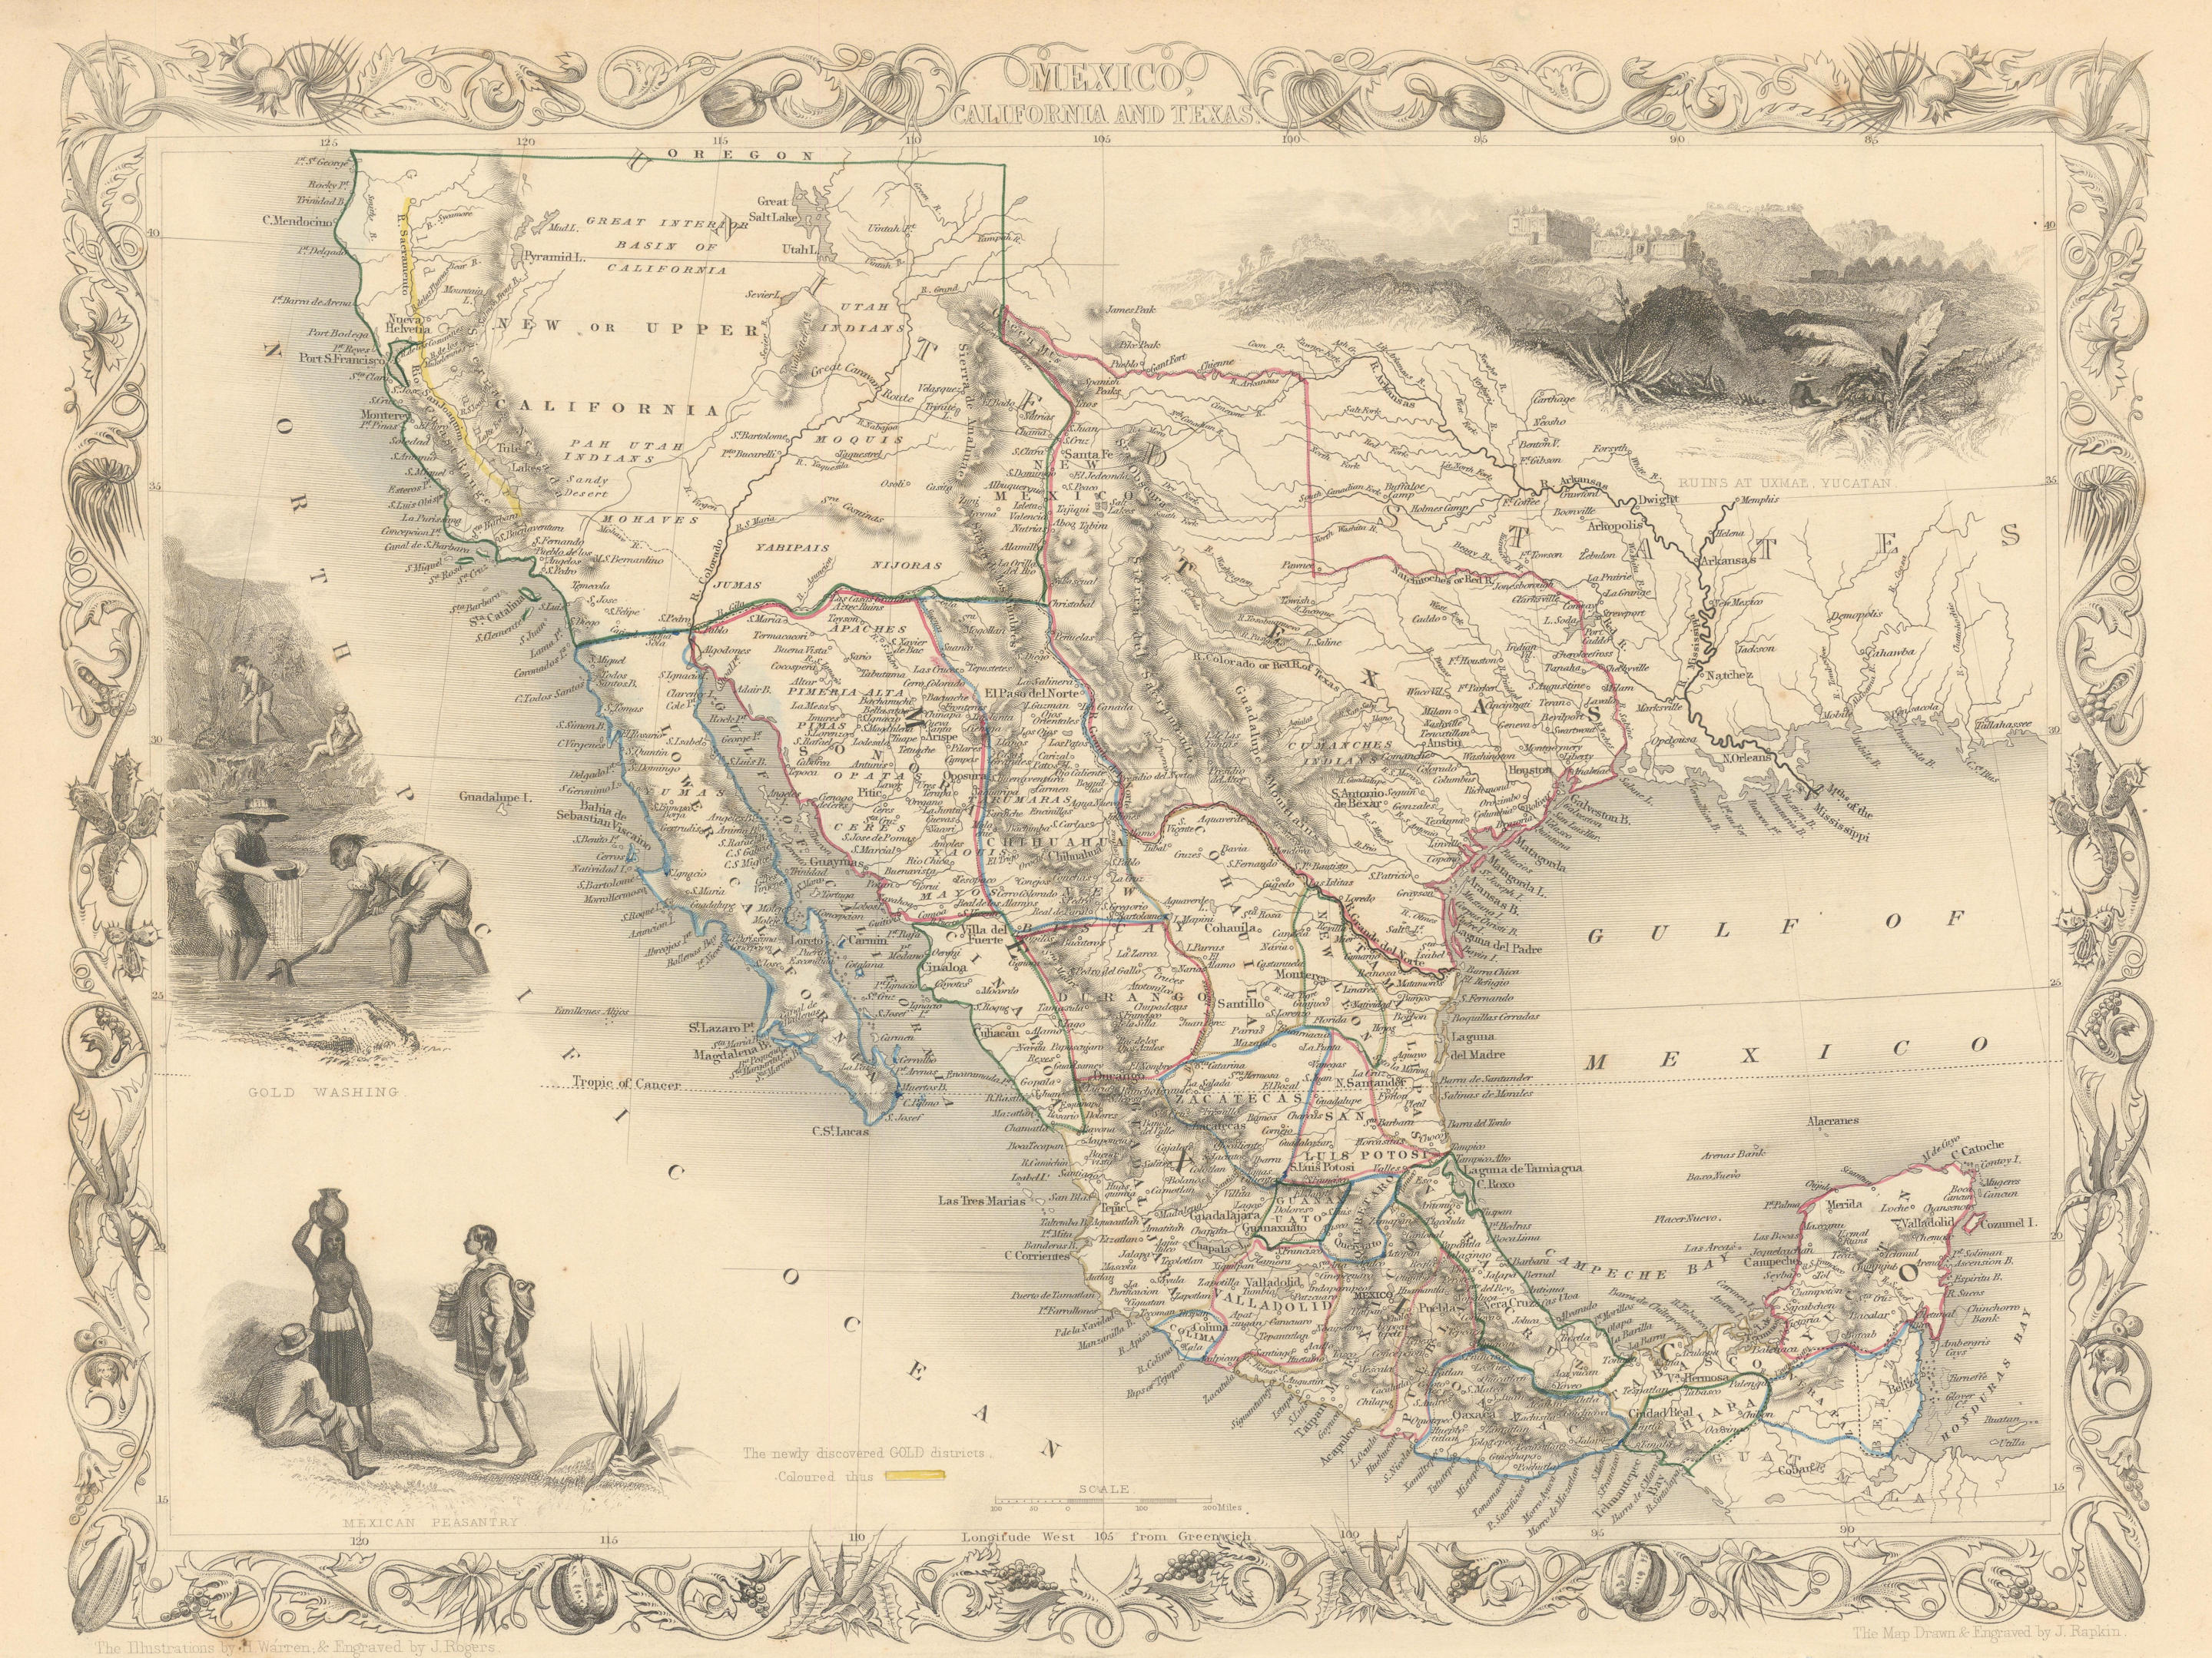 Associate Product MEXICO CALIFORNIA TEXAS. Gold rush district. TX Republic.TALLIS/RAPKIN 1851 map